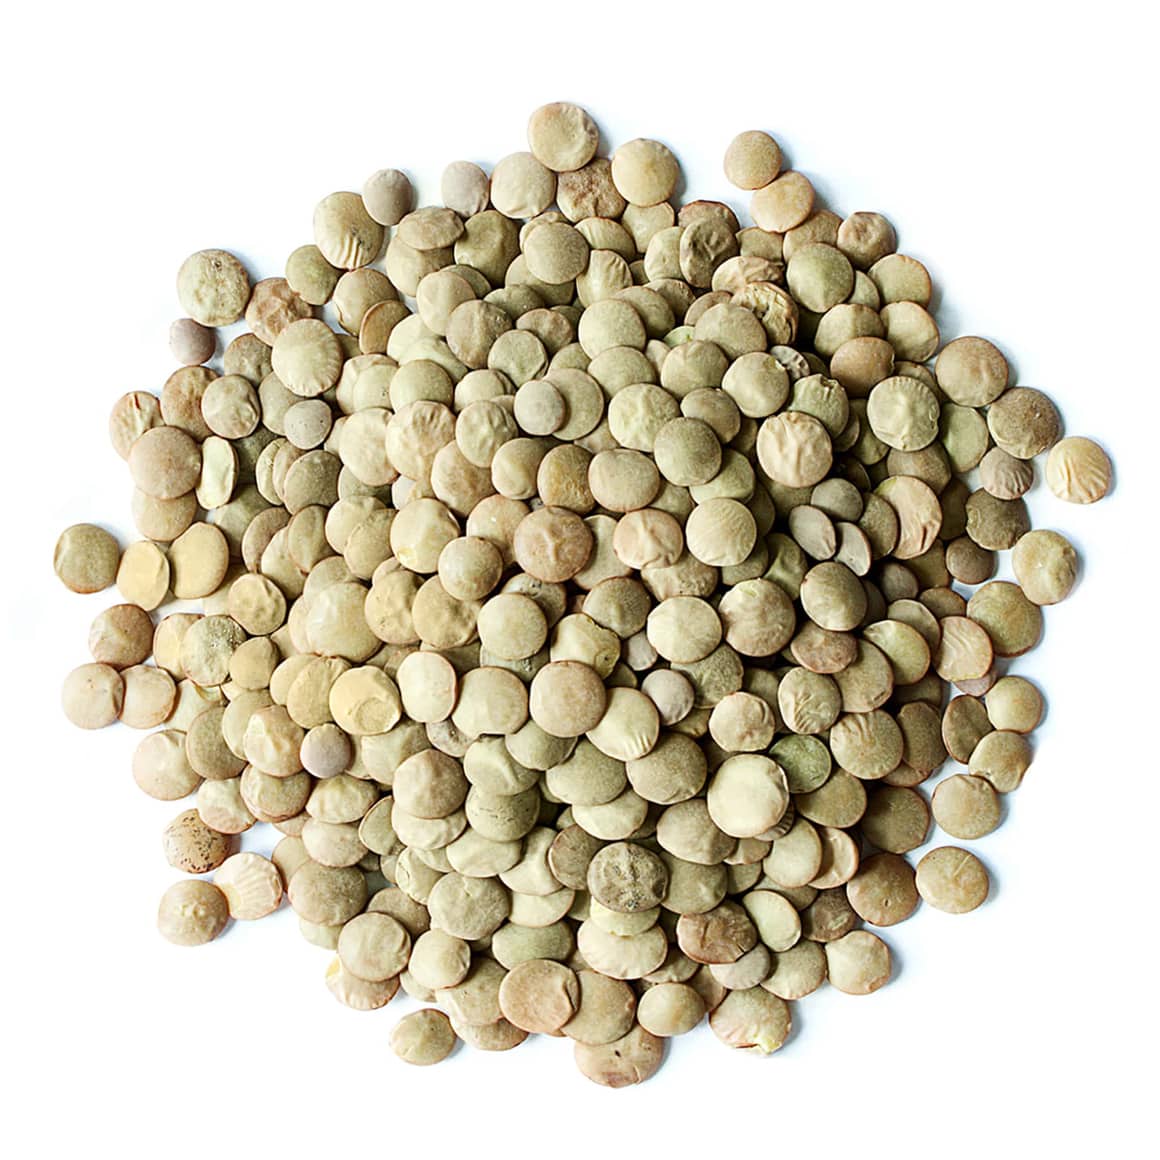 https://foodtolive.com/wp-content/uploads/2015/10/1-whole-green-lentils-main-min.jpg